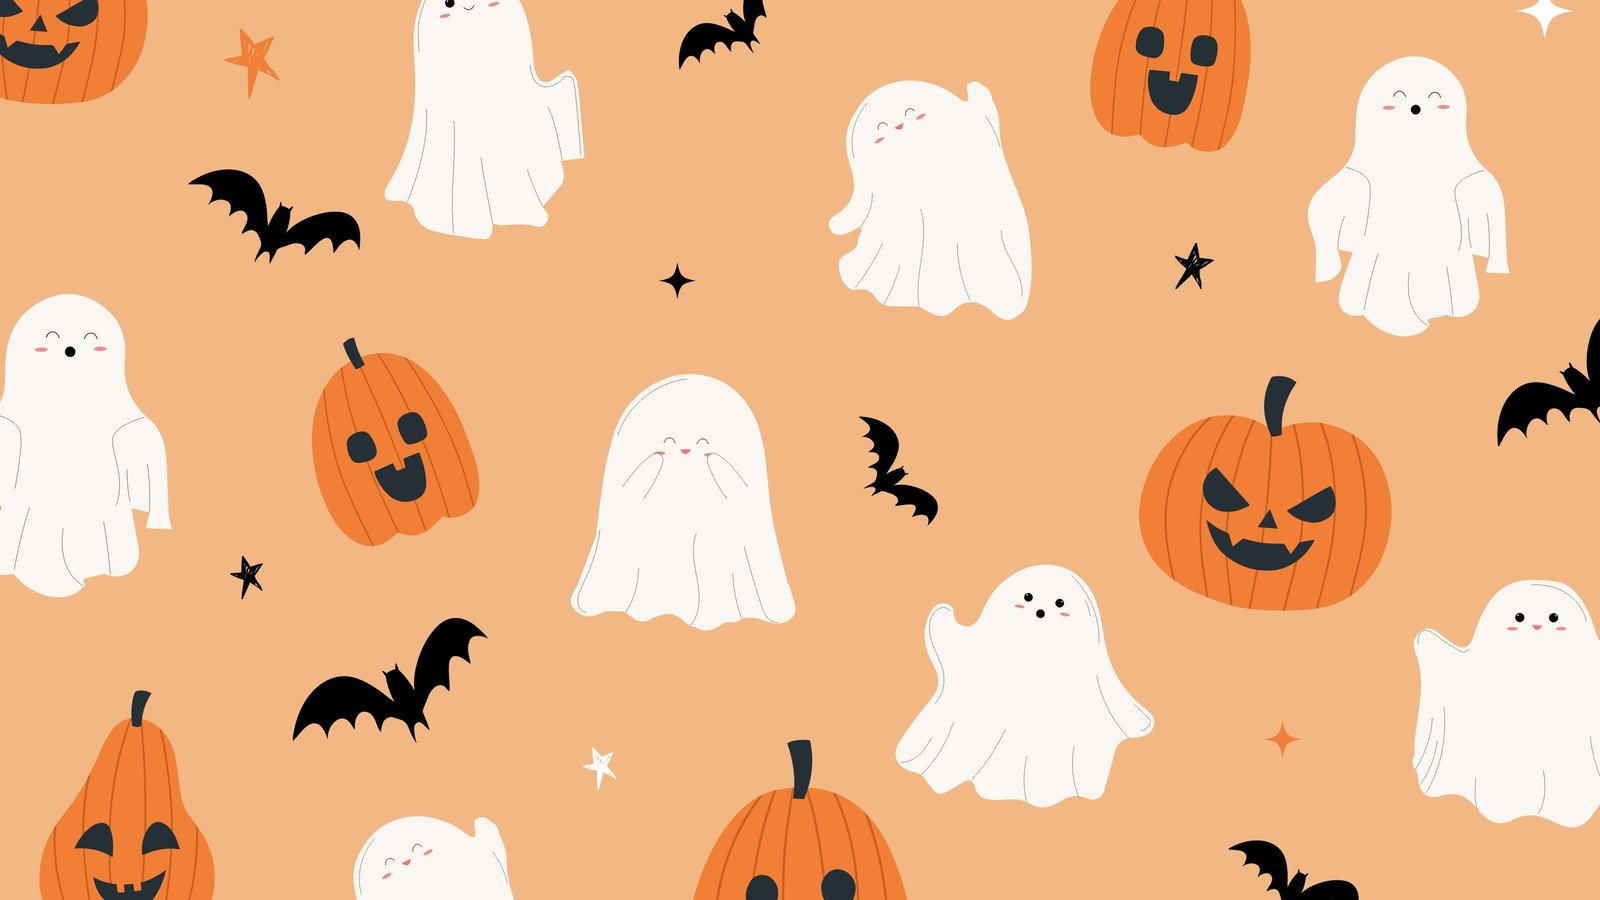 Cute Halloween Wallpaper Images - Free Download on Freepik